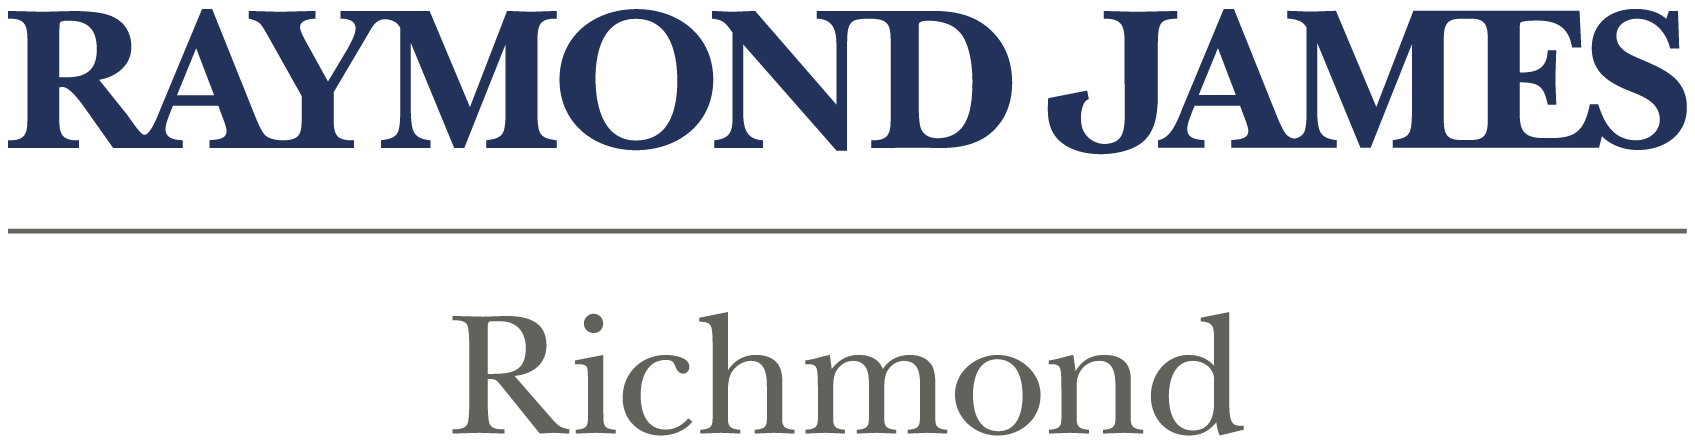 Raymond James, Richmond Logo